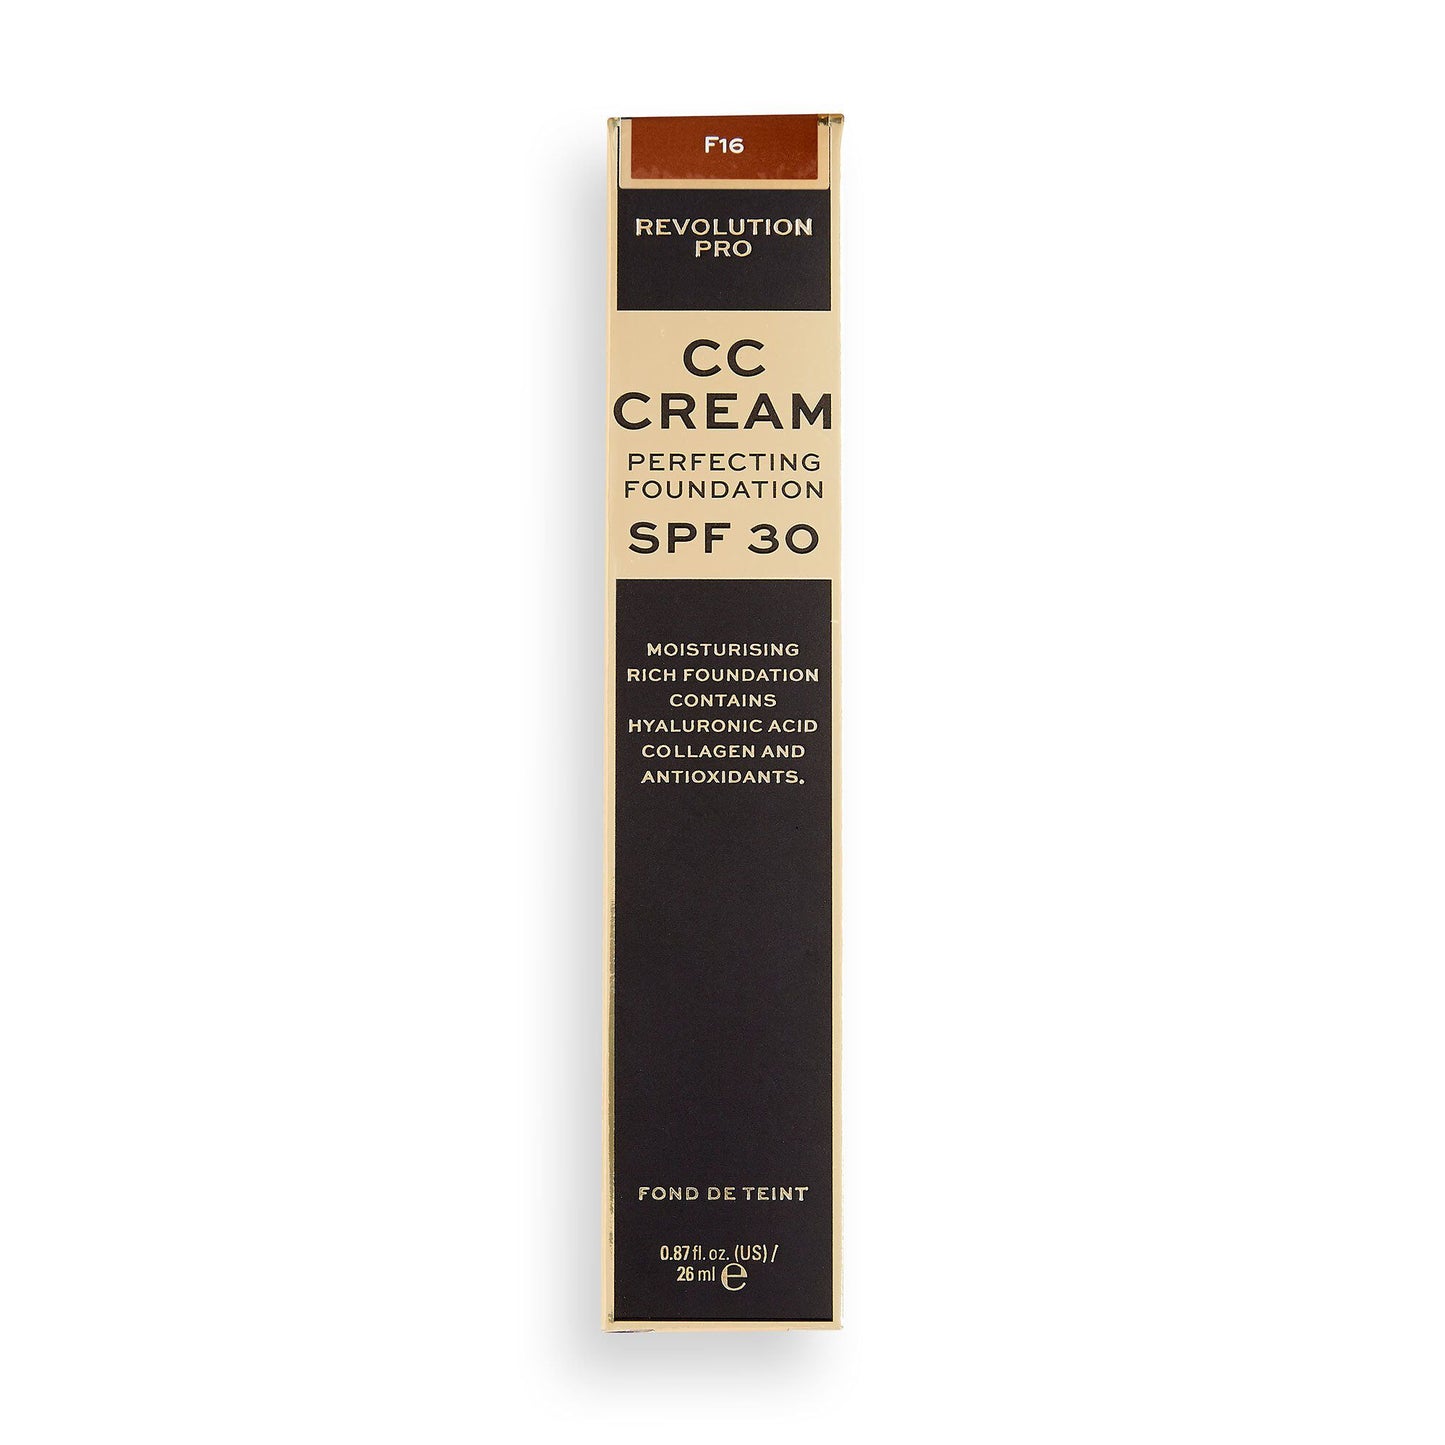 Revolution Pro CC Cream Perfecting Foundation SPF30 F16